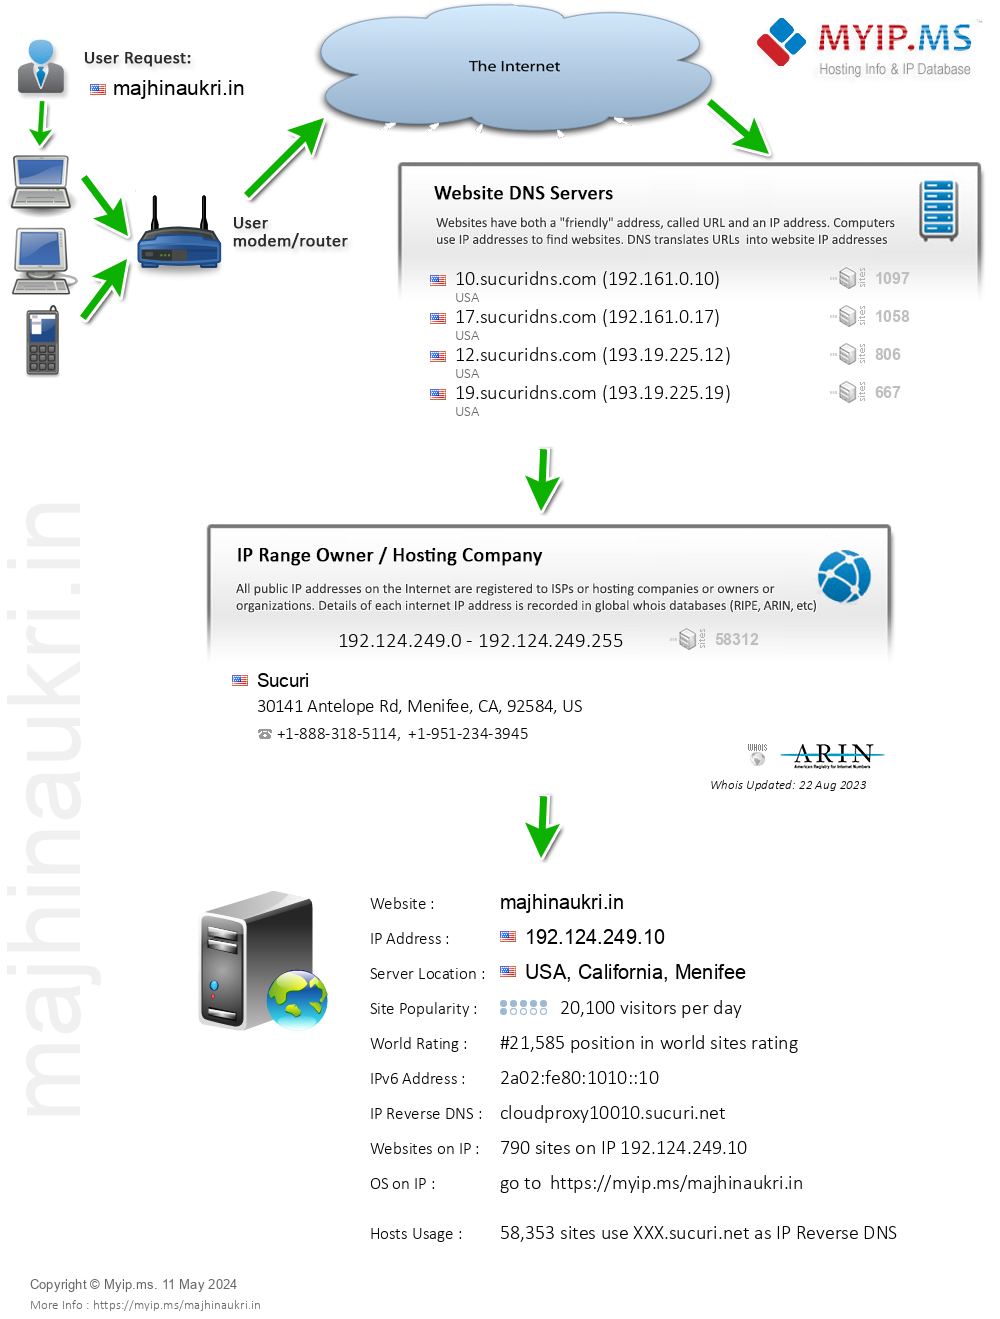 Majhinaukri.in - Website Hosting Visual IP Diagram